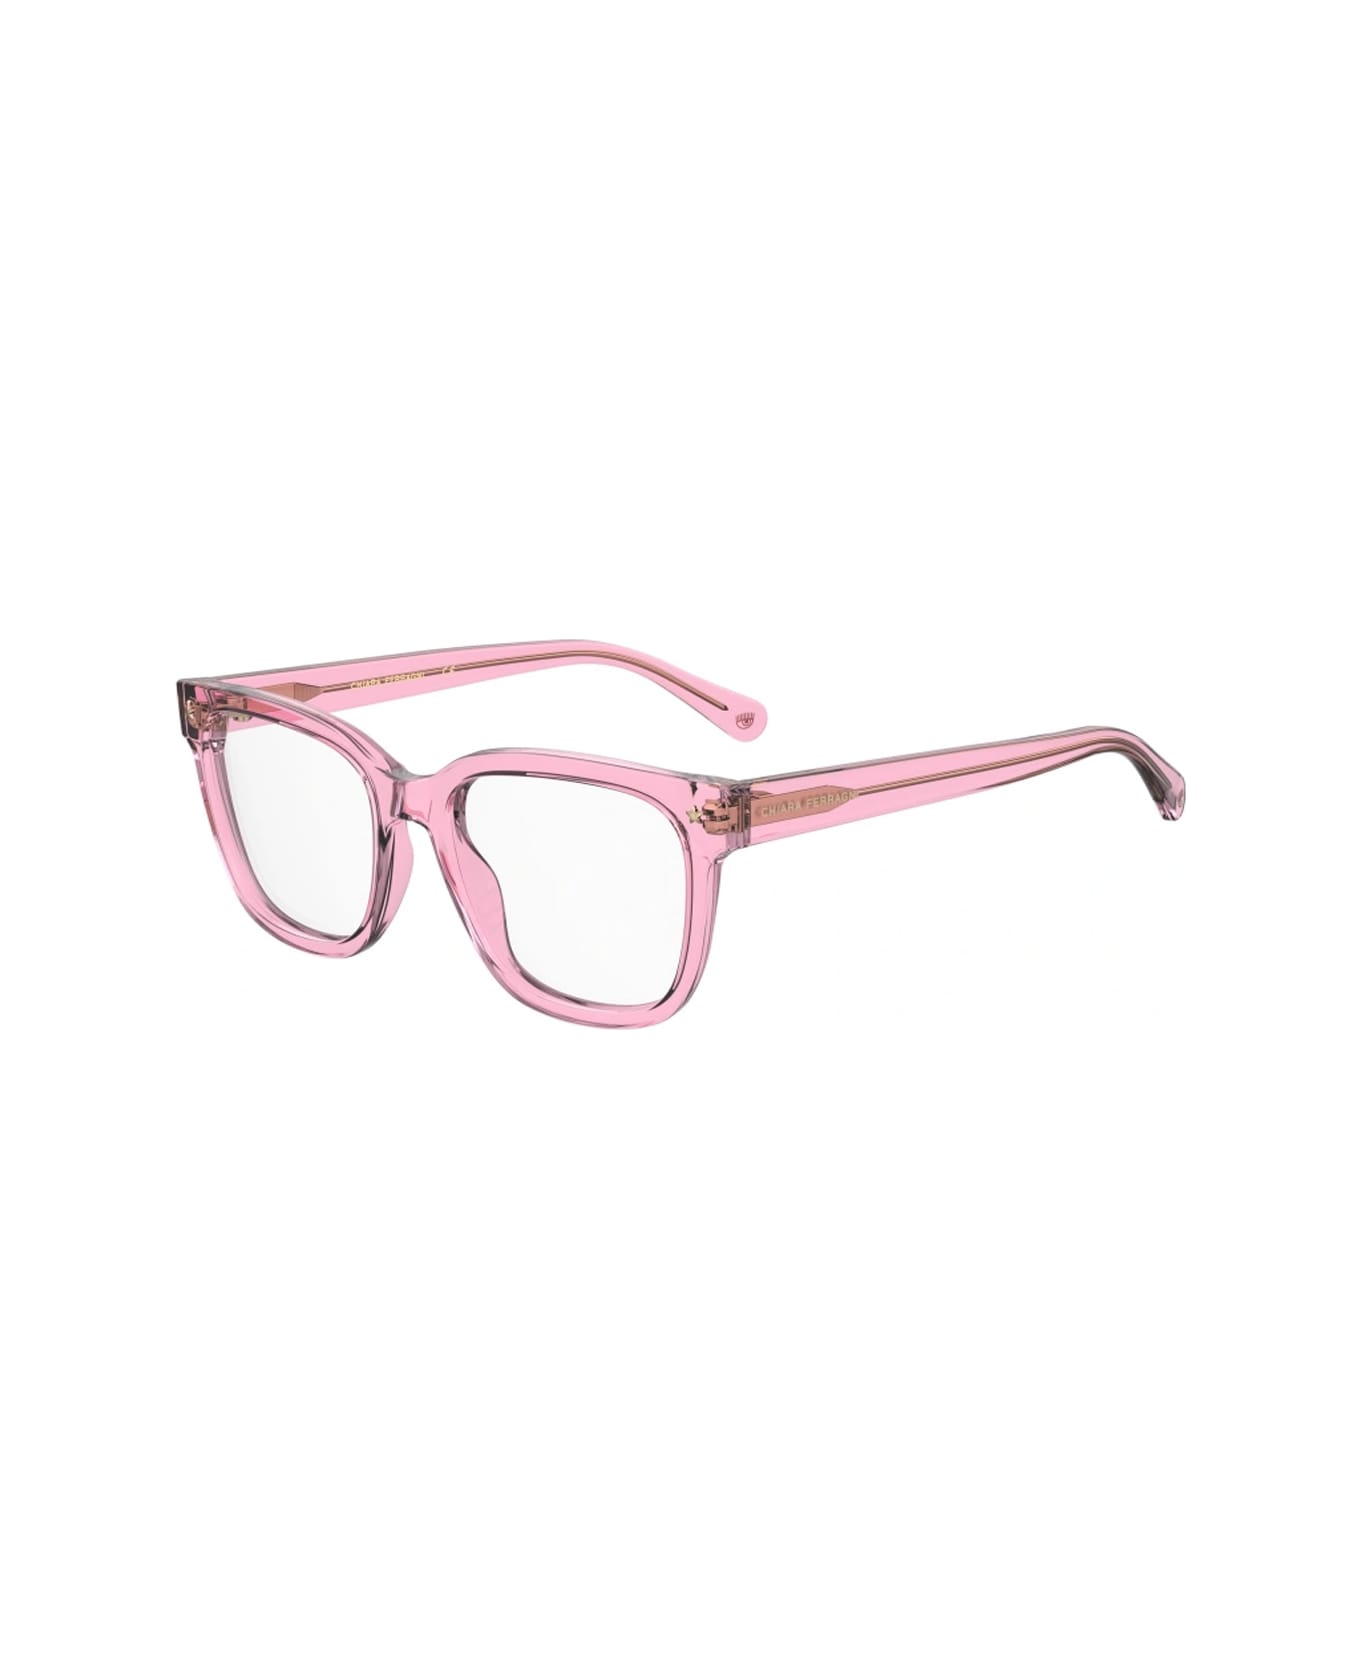 Chiara Ferragni Cf 7027 35j/18 Pink Glasses - Rosa アイウェア